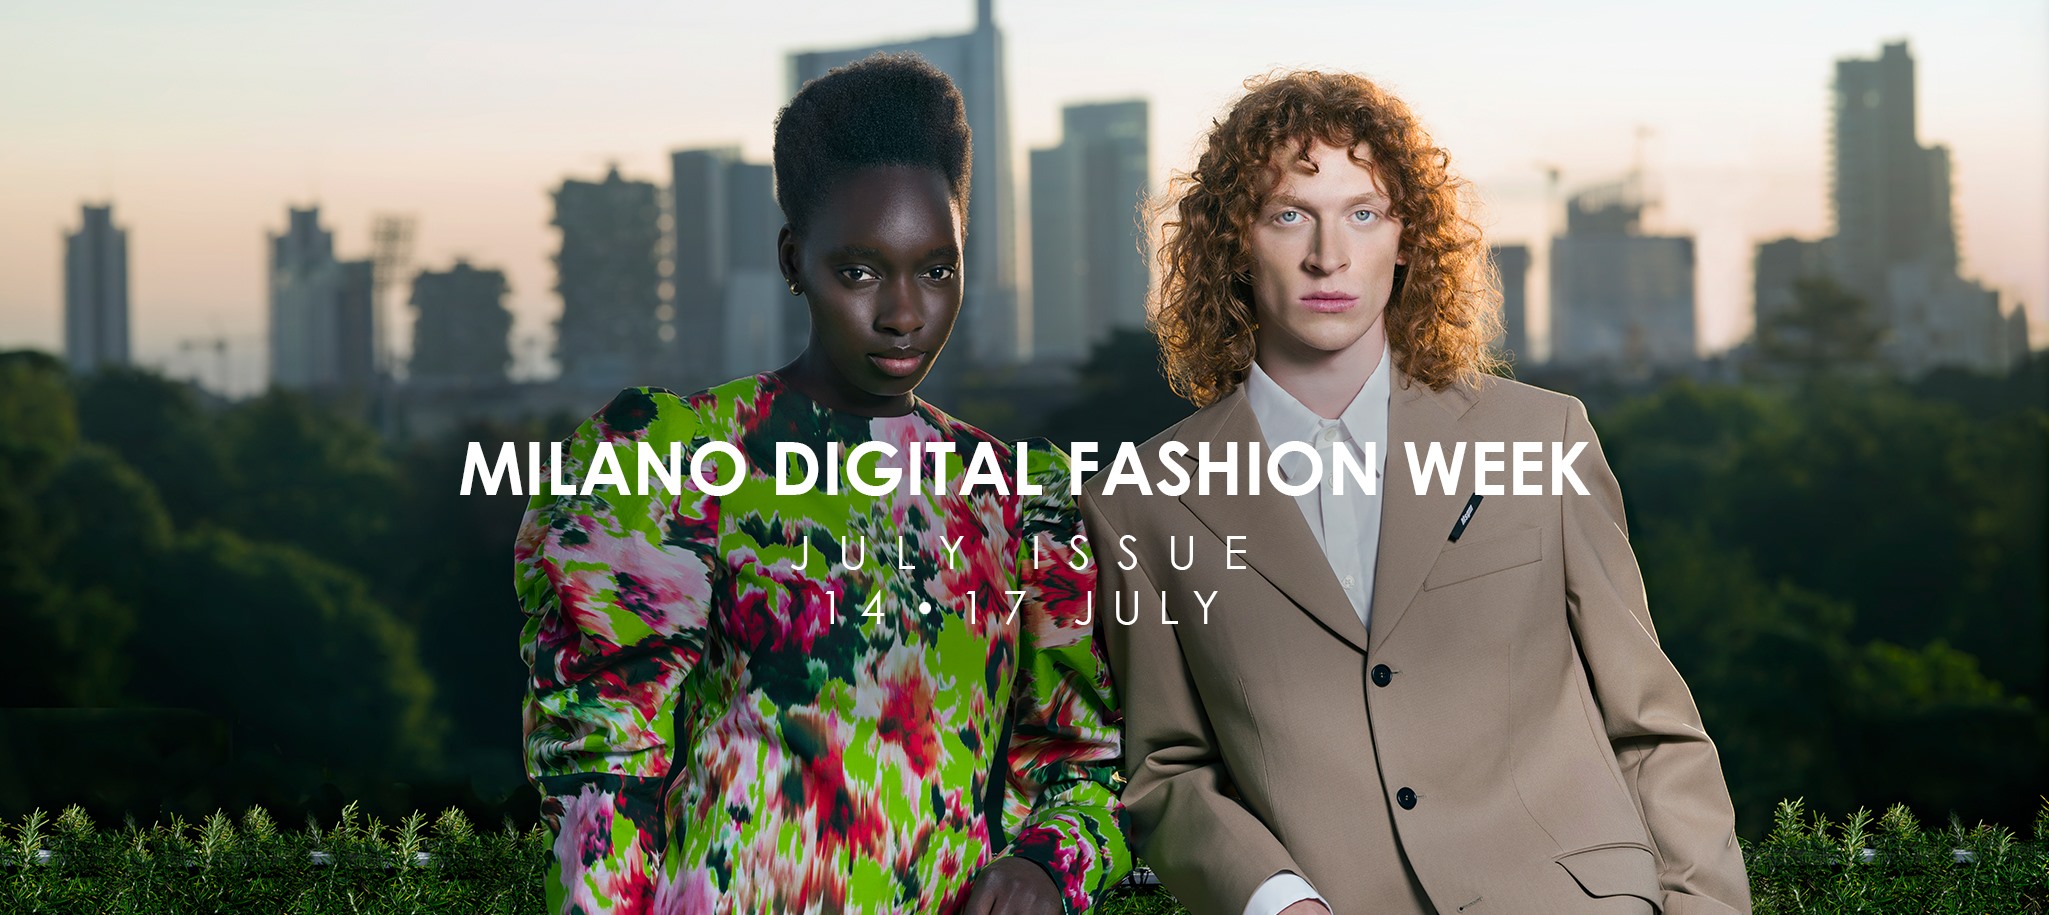 High fashion goes high tech at Milan Digital Fashion Week - Microsoft ...